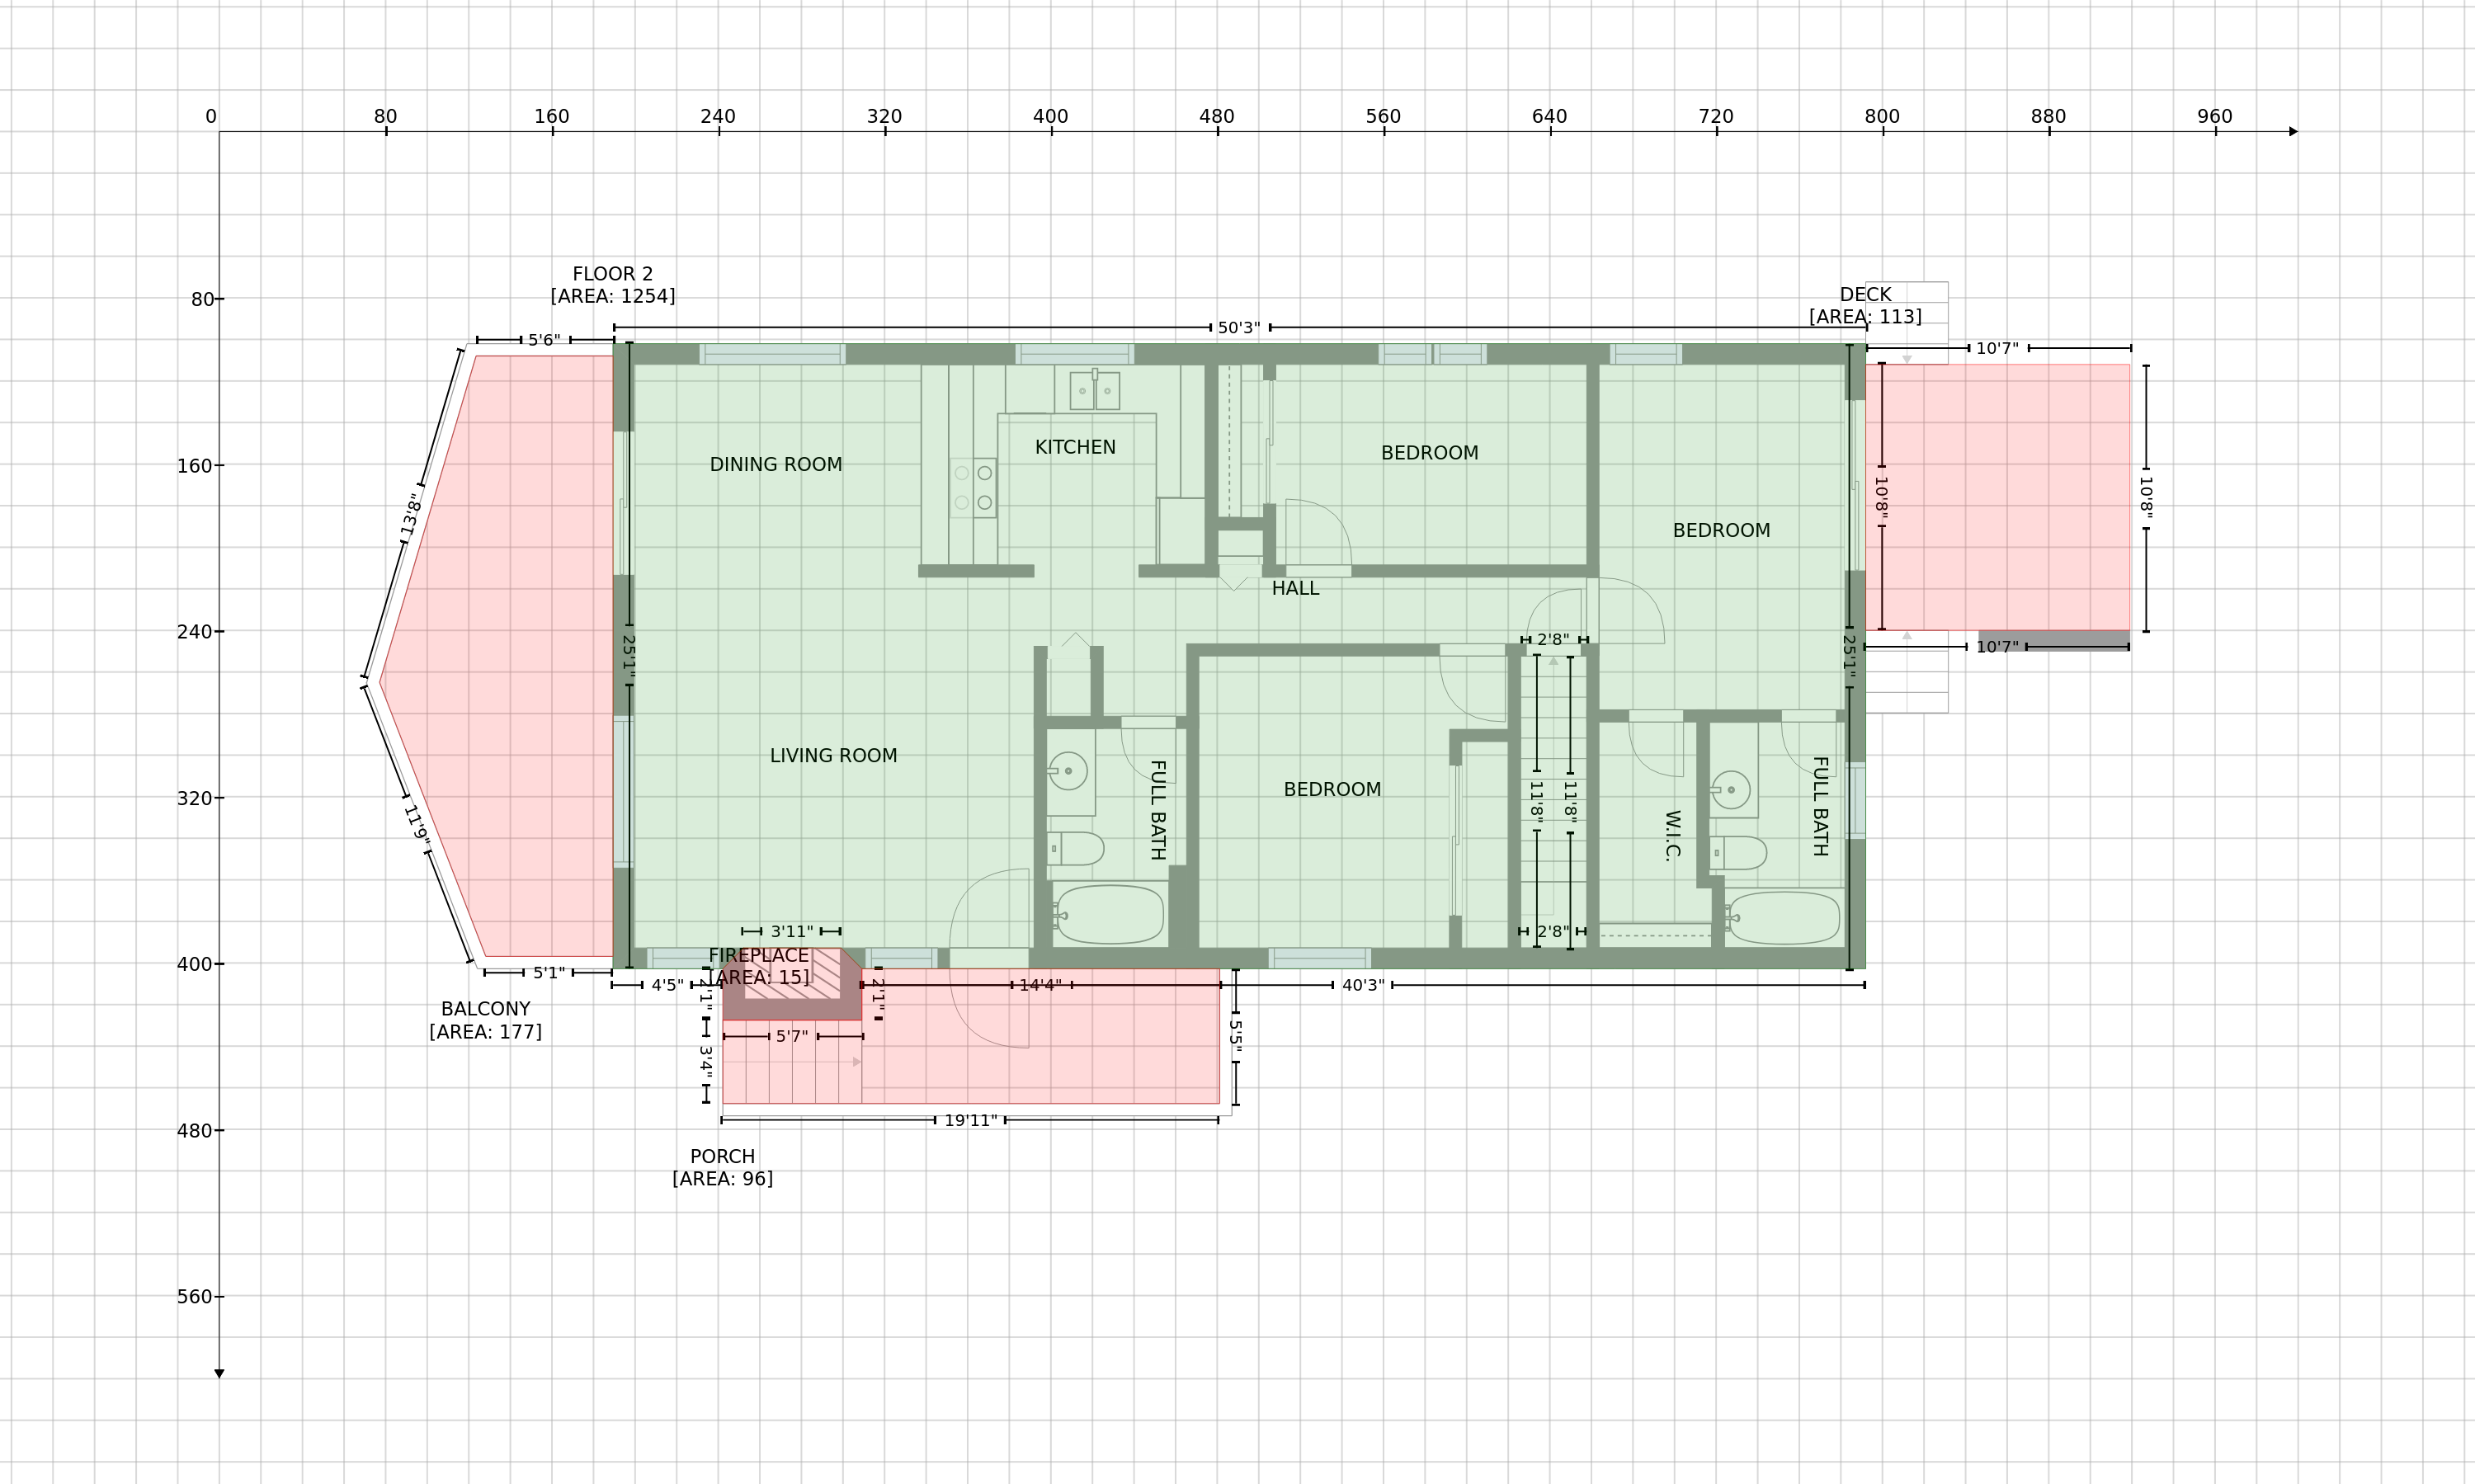 Schematic Floor Plan with GLA